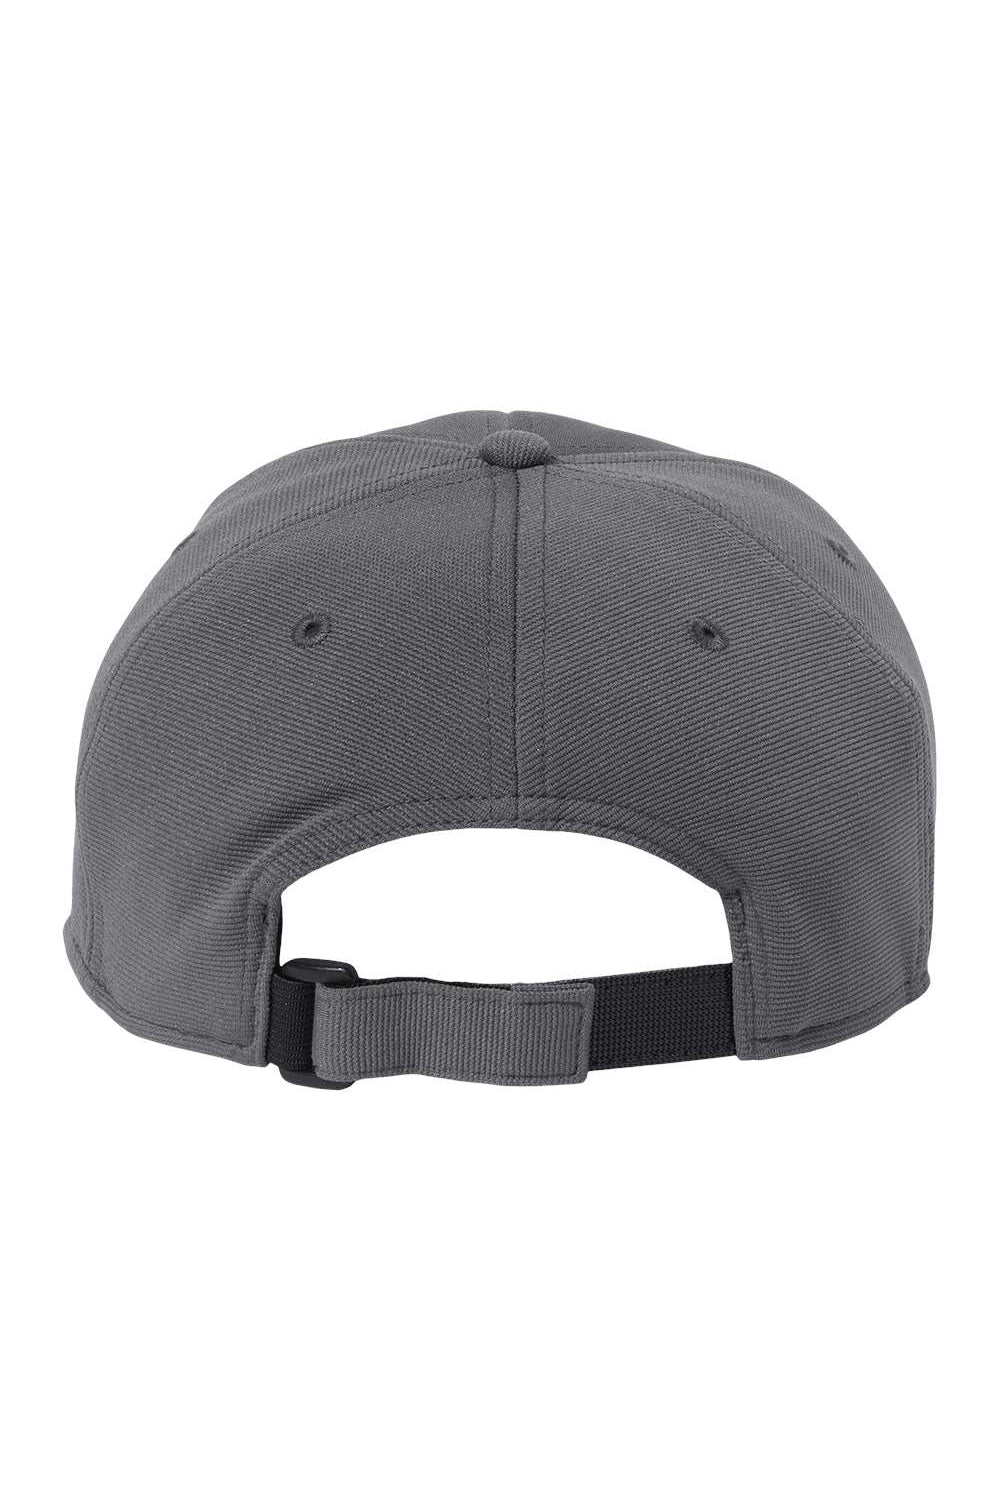 Atlantis Headwear SAND Mens Sustainable Performance Adjustable Hat Dark Grey Flat Back